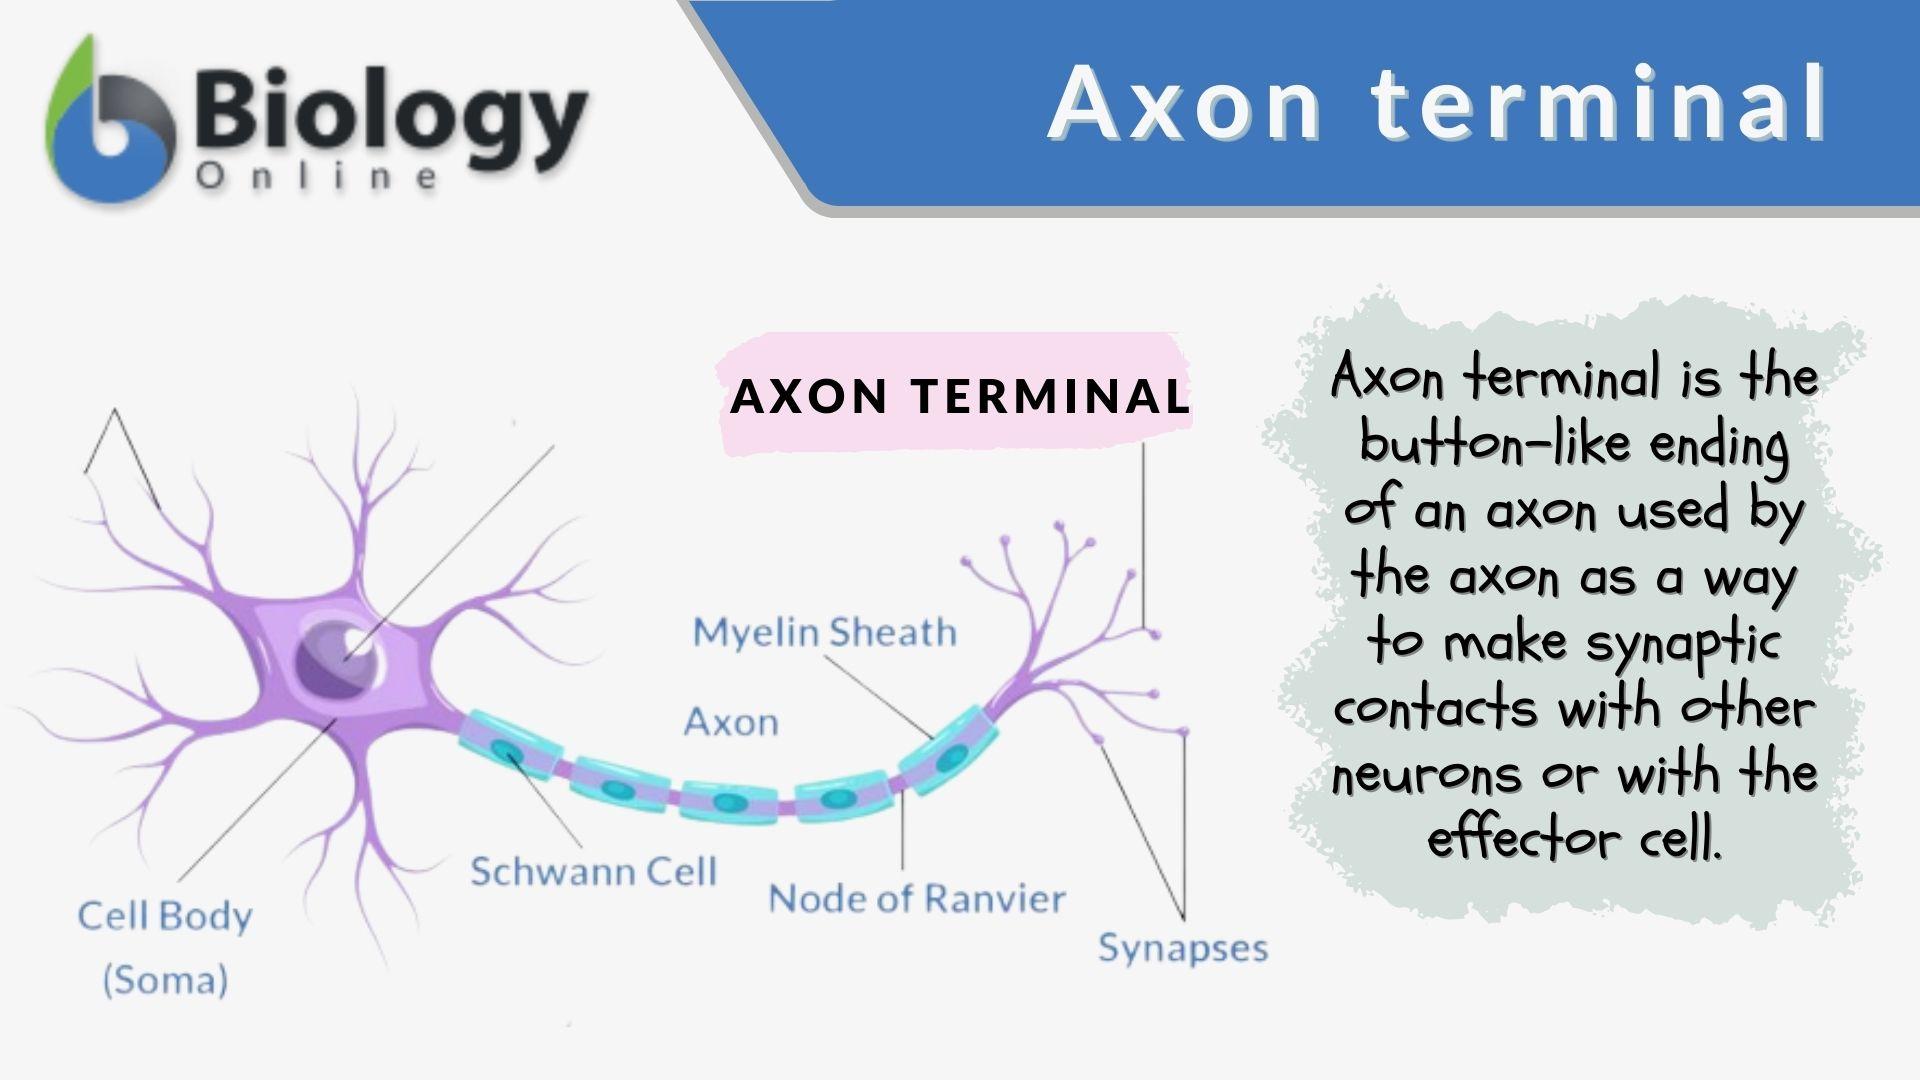 https://www.biologyonline.com/wp-content/uploads/2019/11/axon-terminal-definition-and-example.jpg